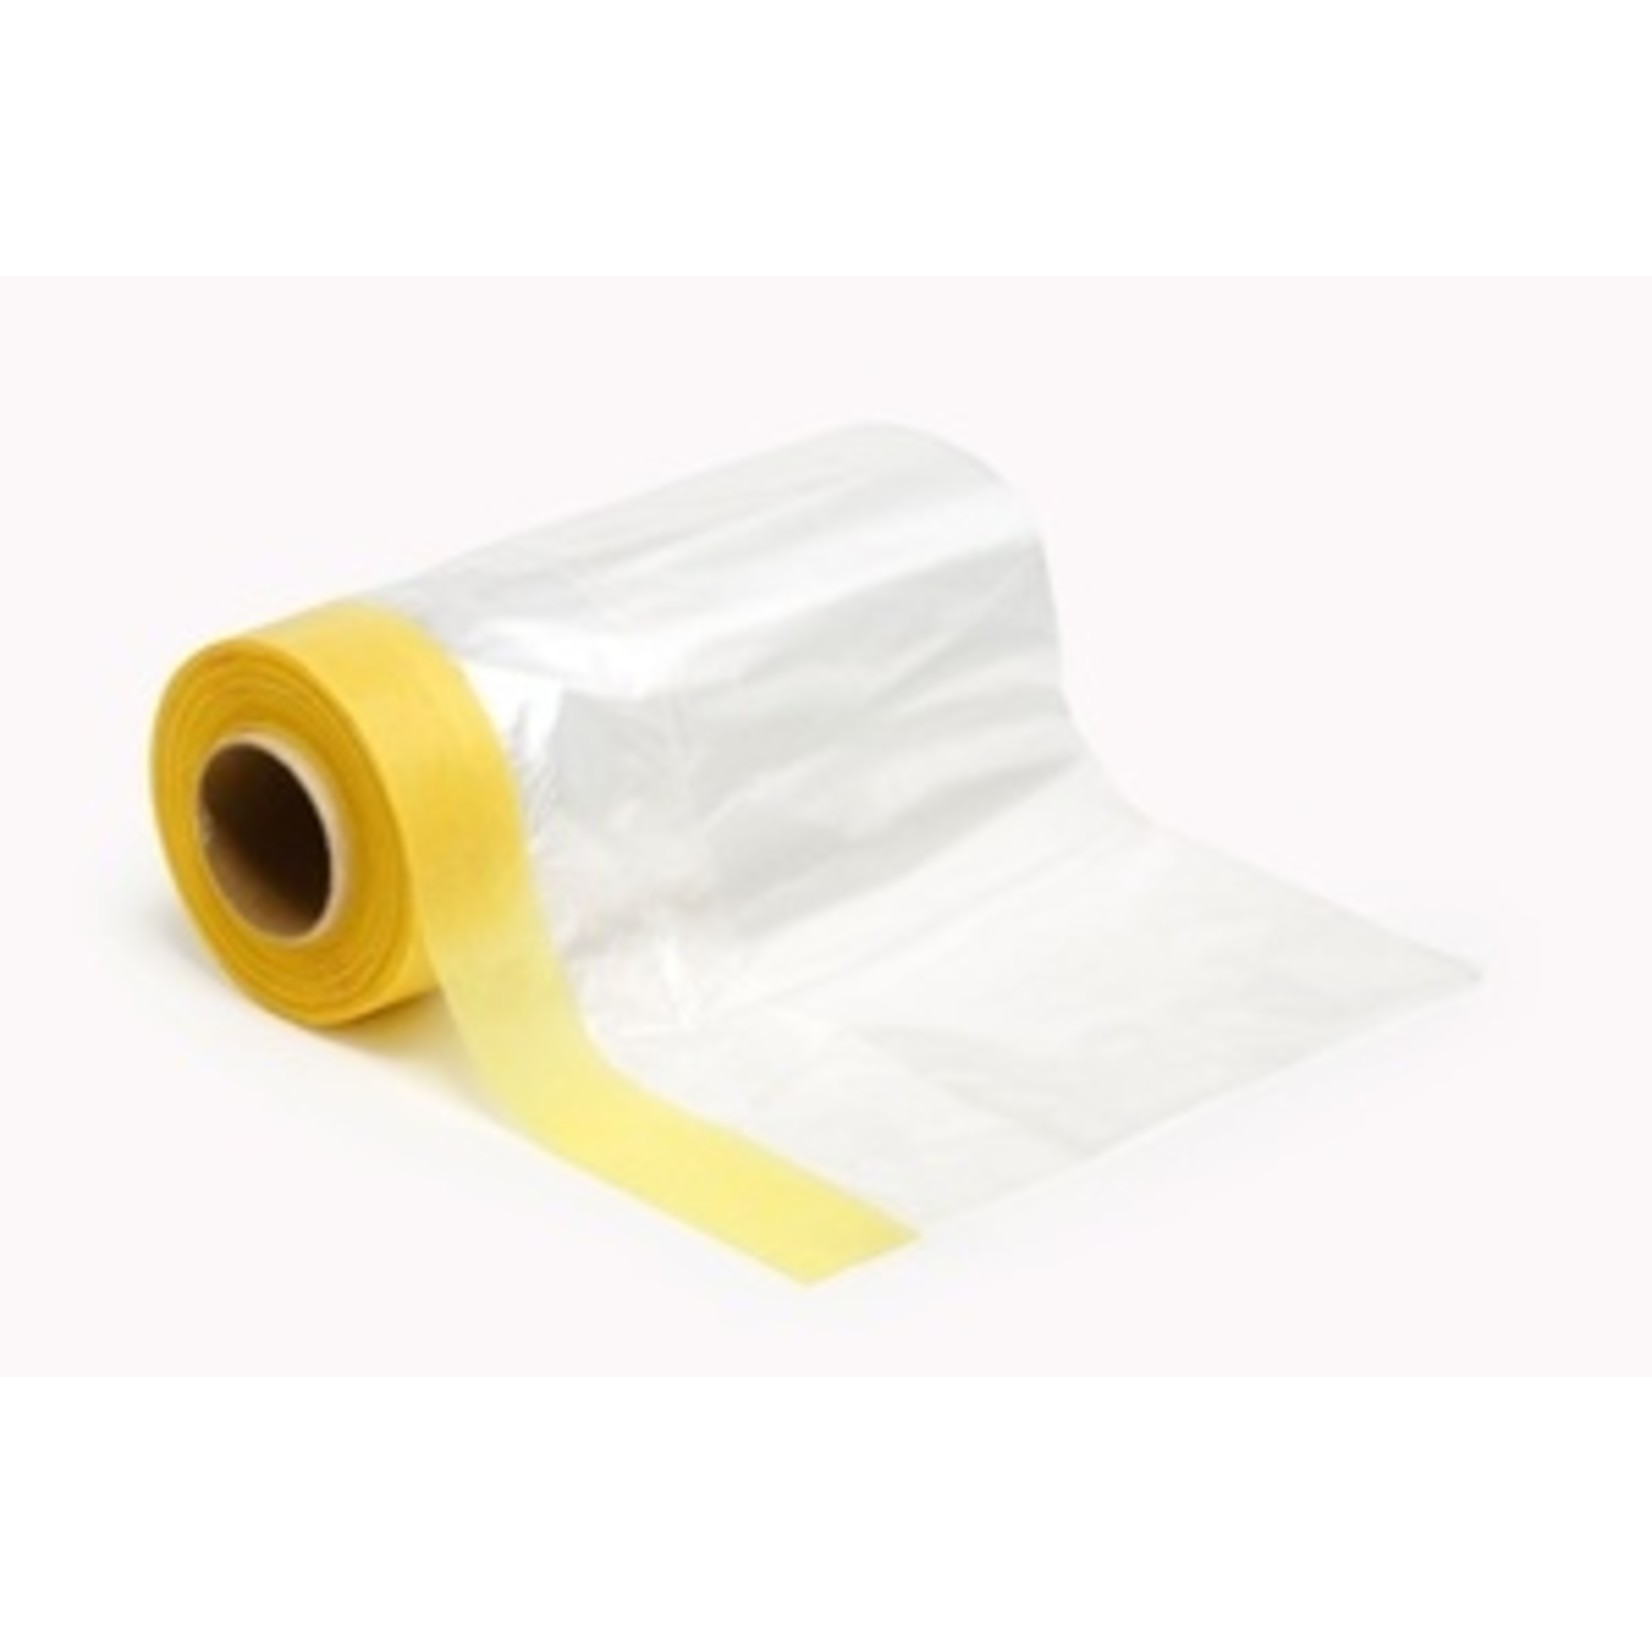 Tamiya TAM87203  Masking Tape / Plastic Sheetin 150mm